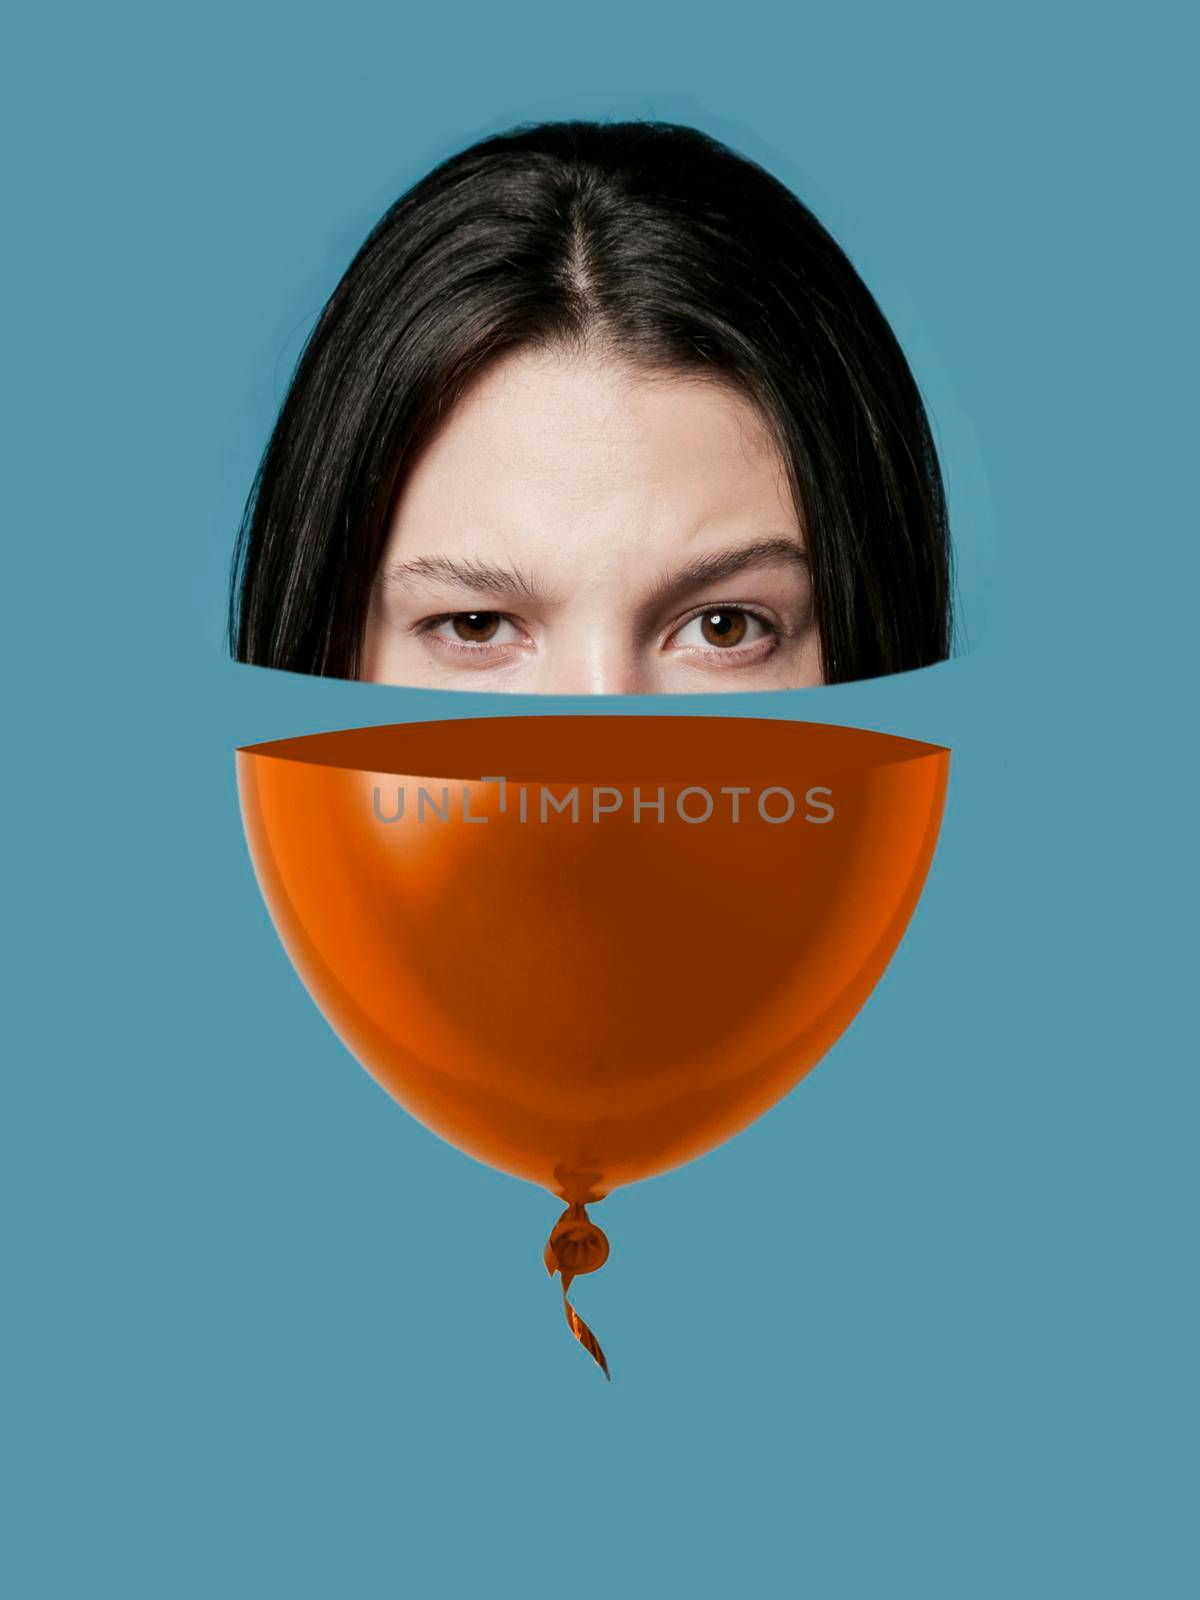 collage half balloon half face. High quality photo by Zahard